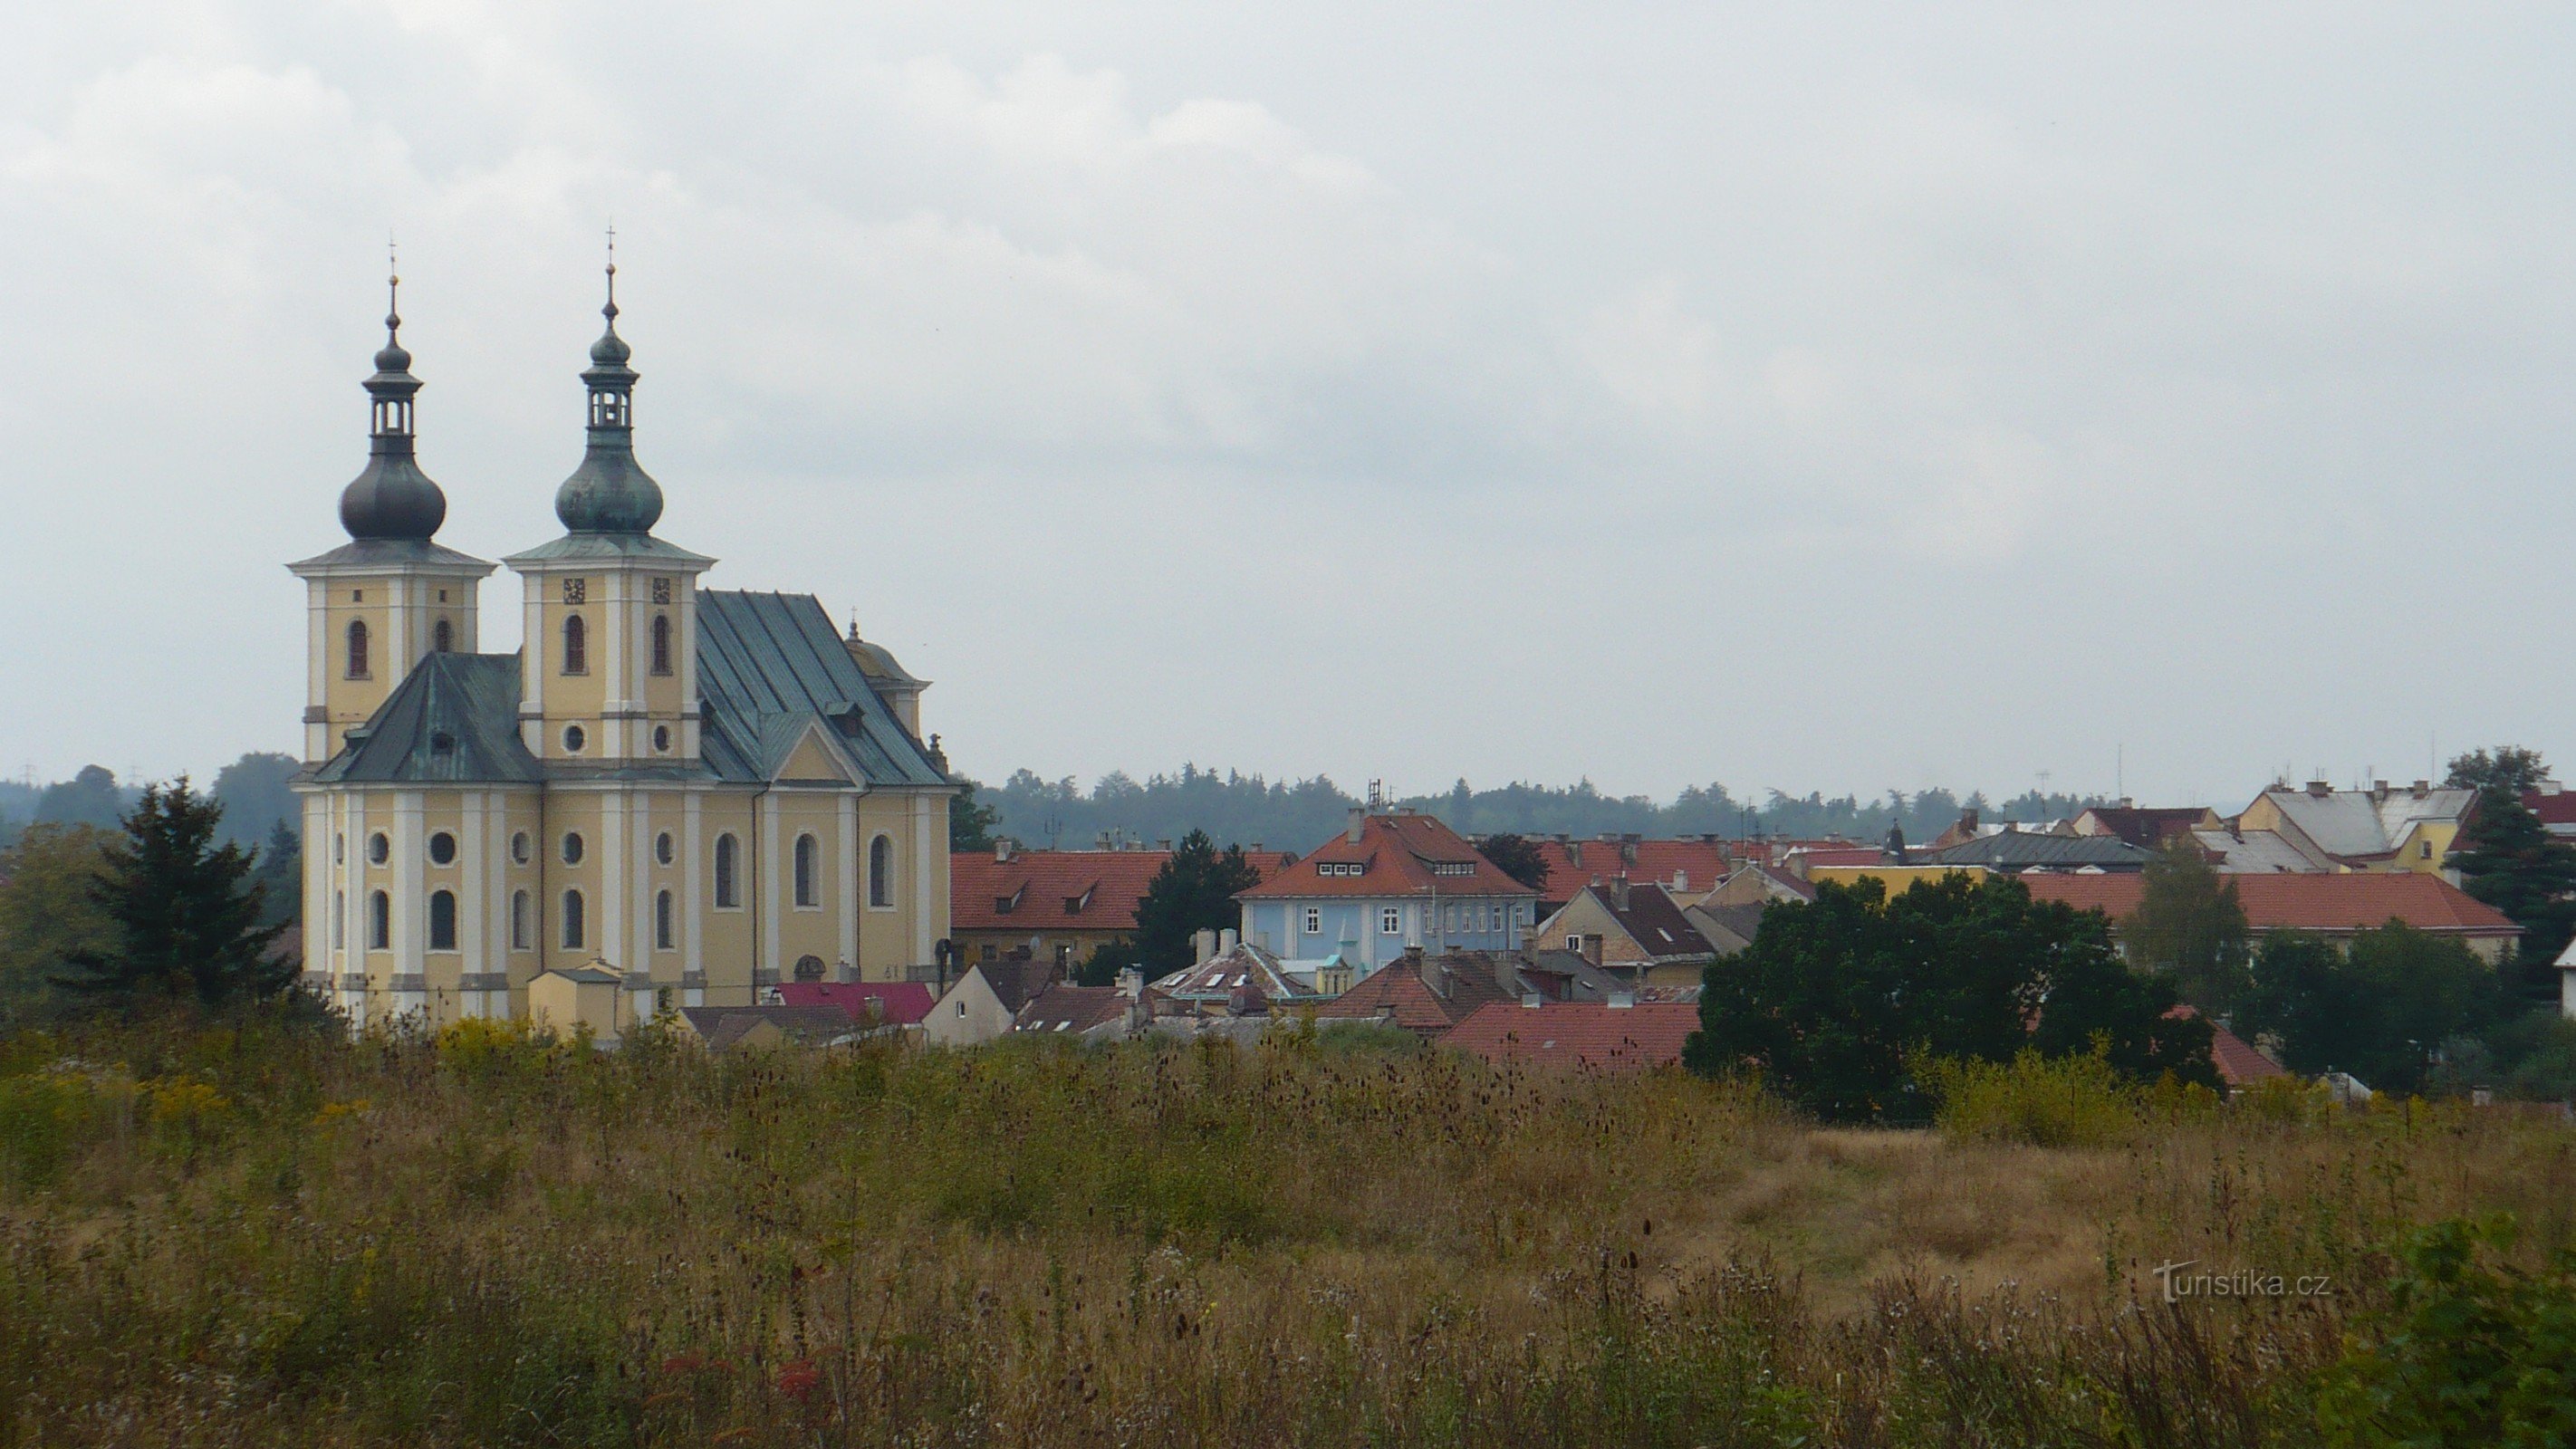 Kynšperk nad Ohří - Εκκλησία της Κοιμήσεως της Θεοτόκου